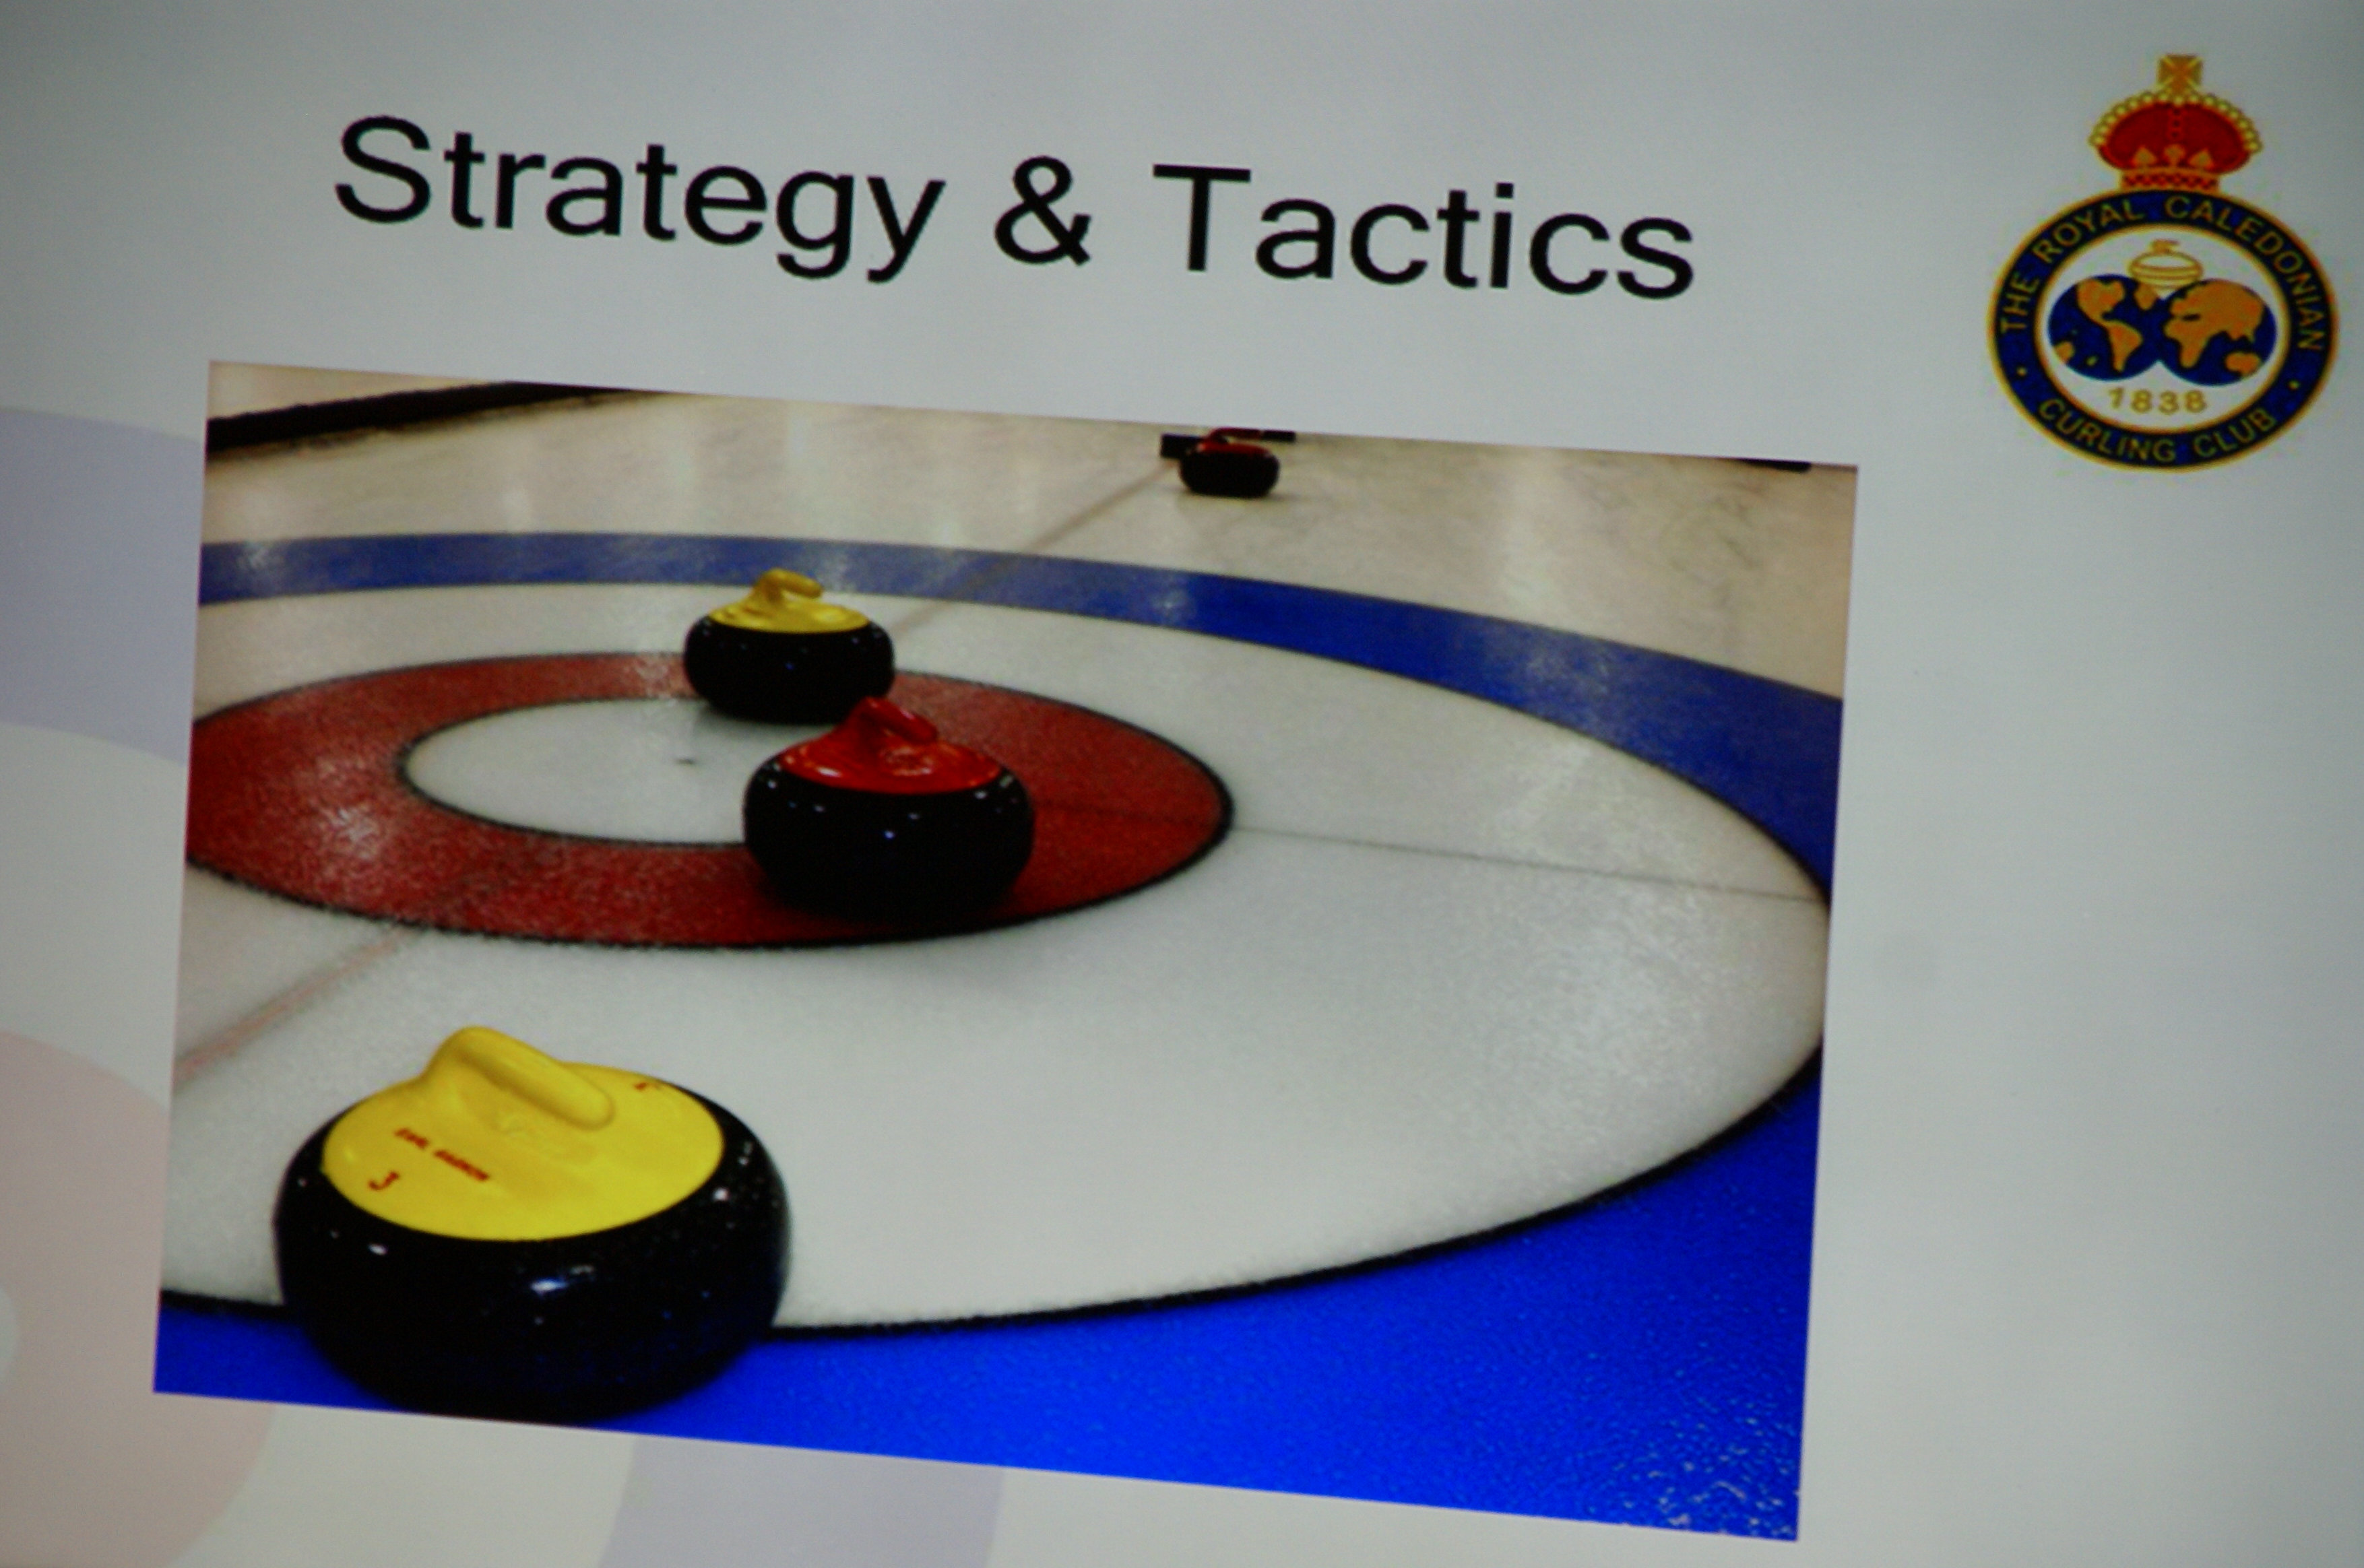 Strategy and Tactics Seminar 2014